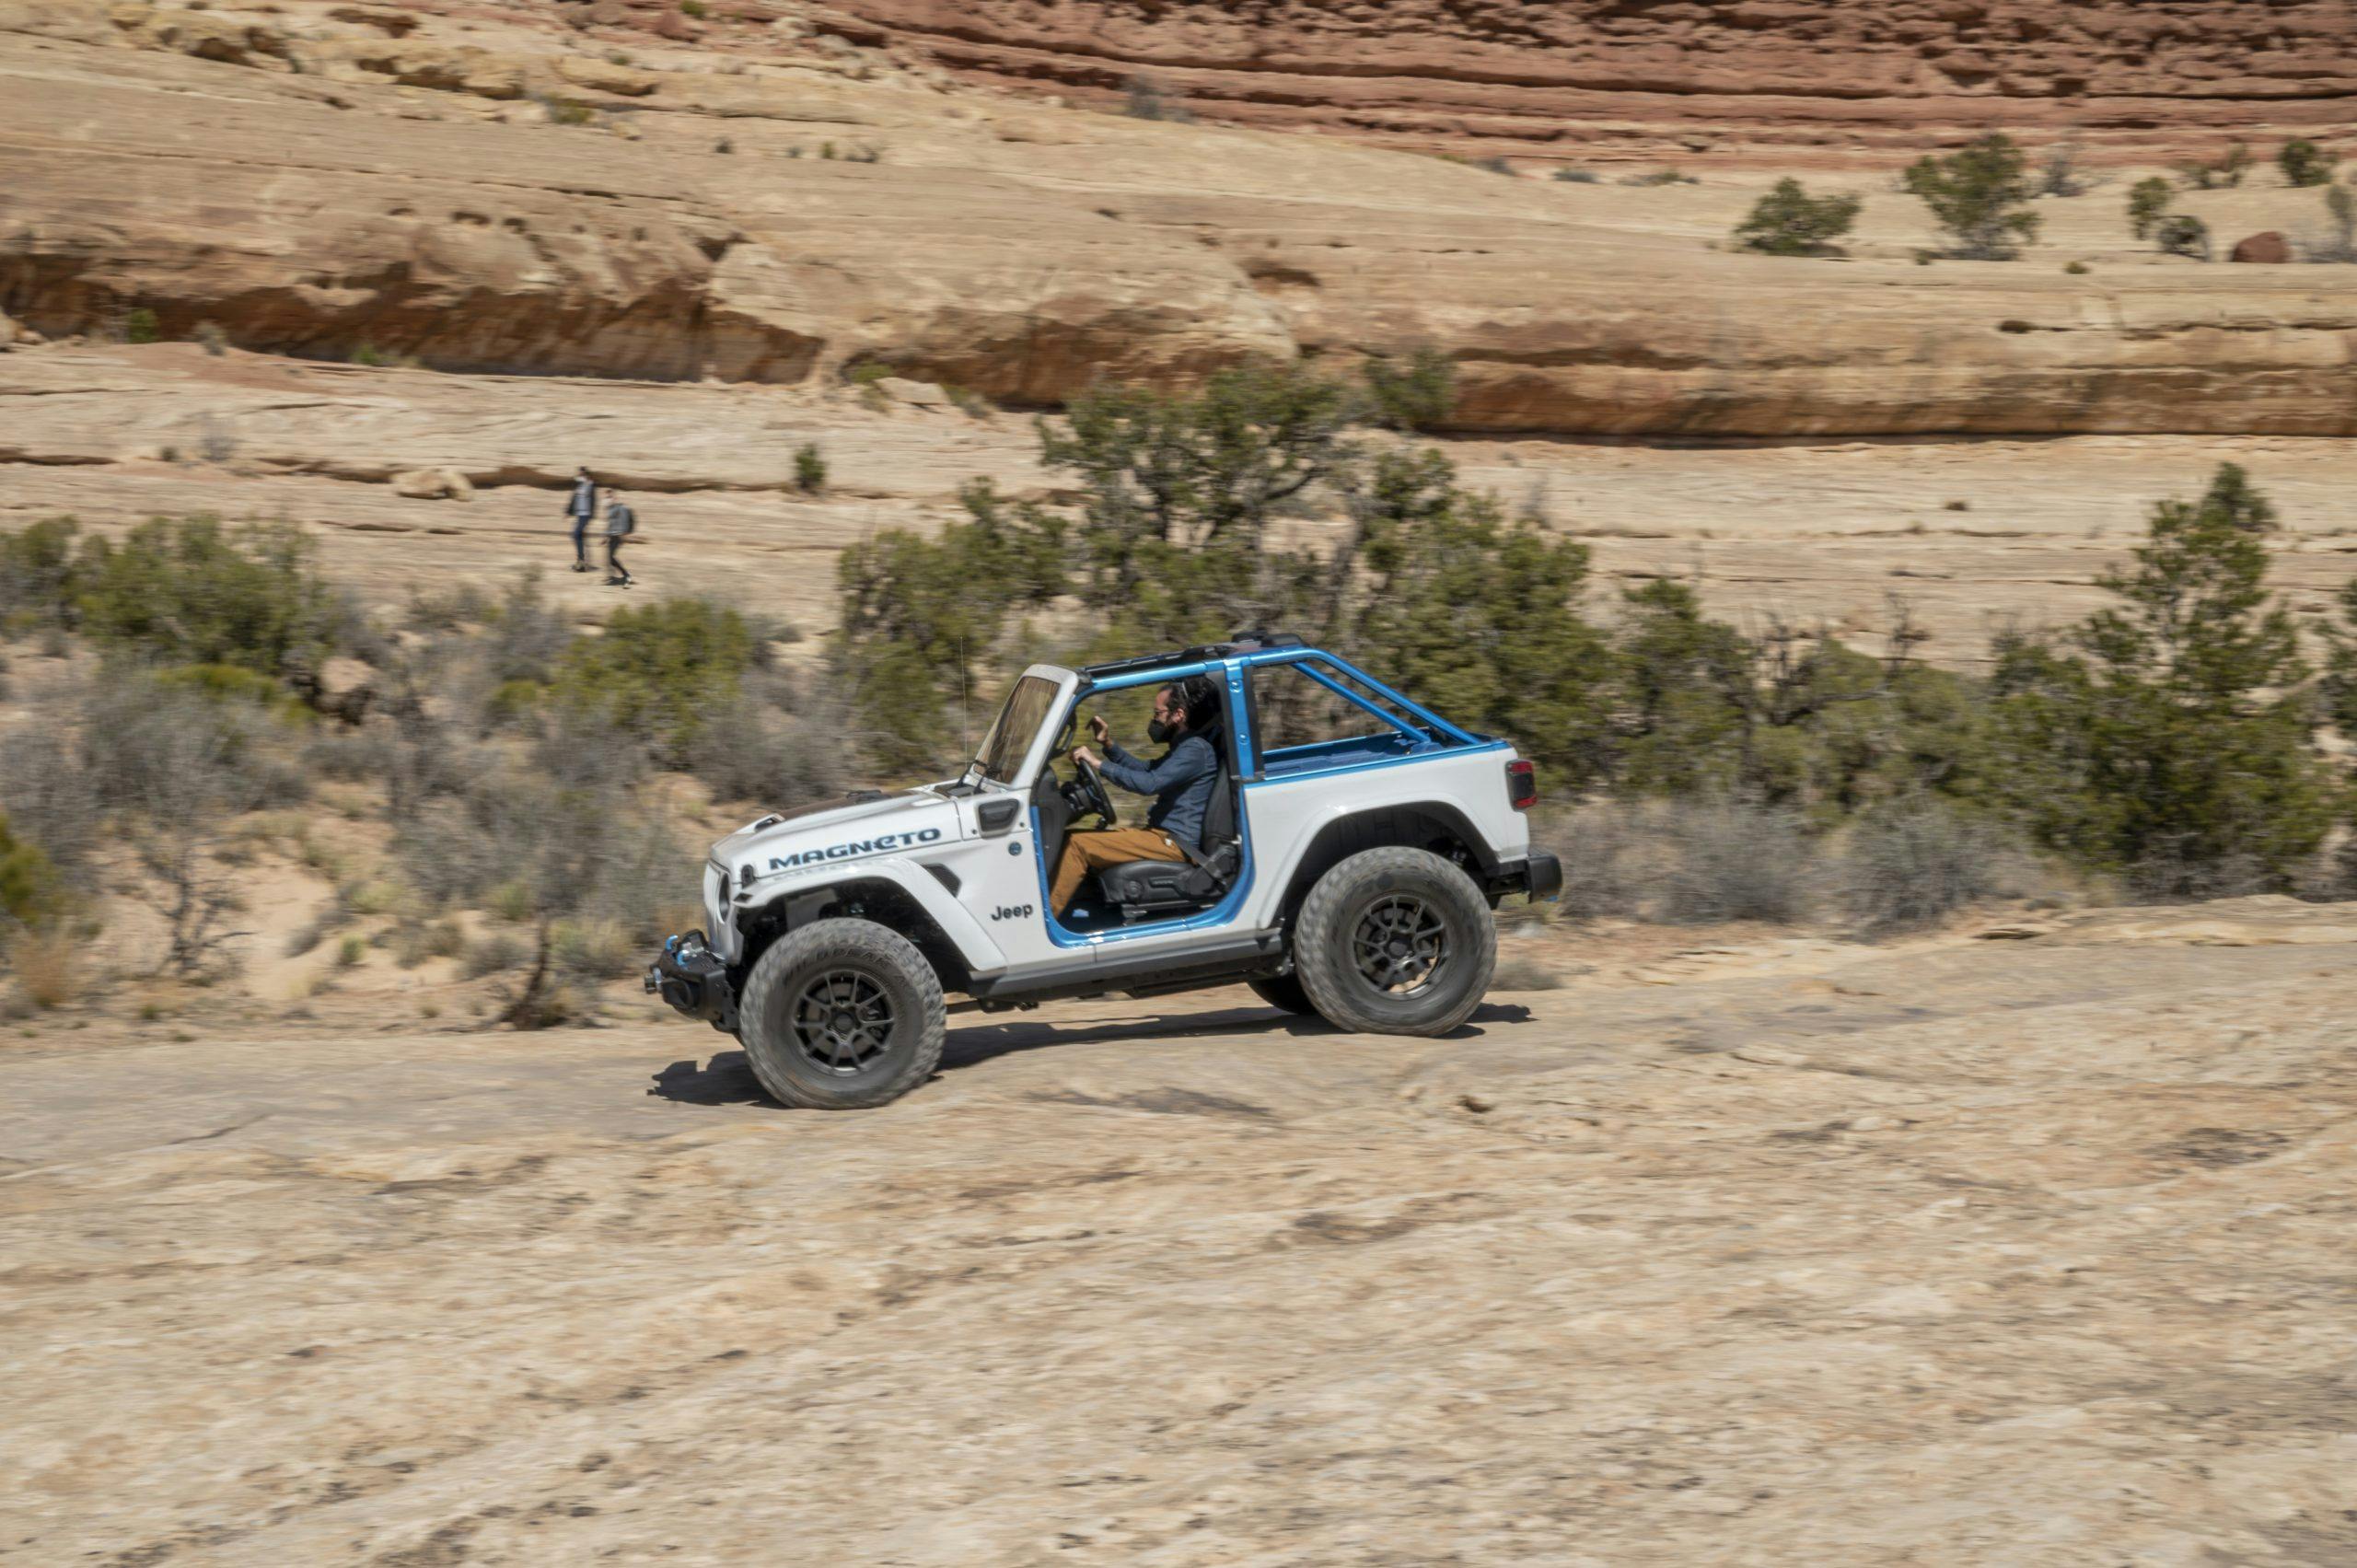 Magneto Jeep side profile action moab